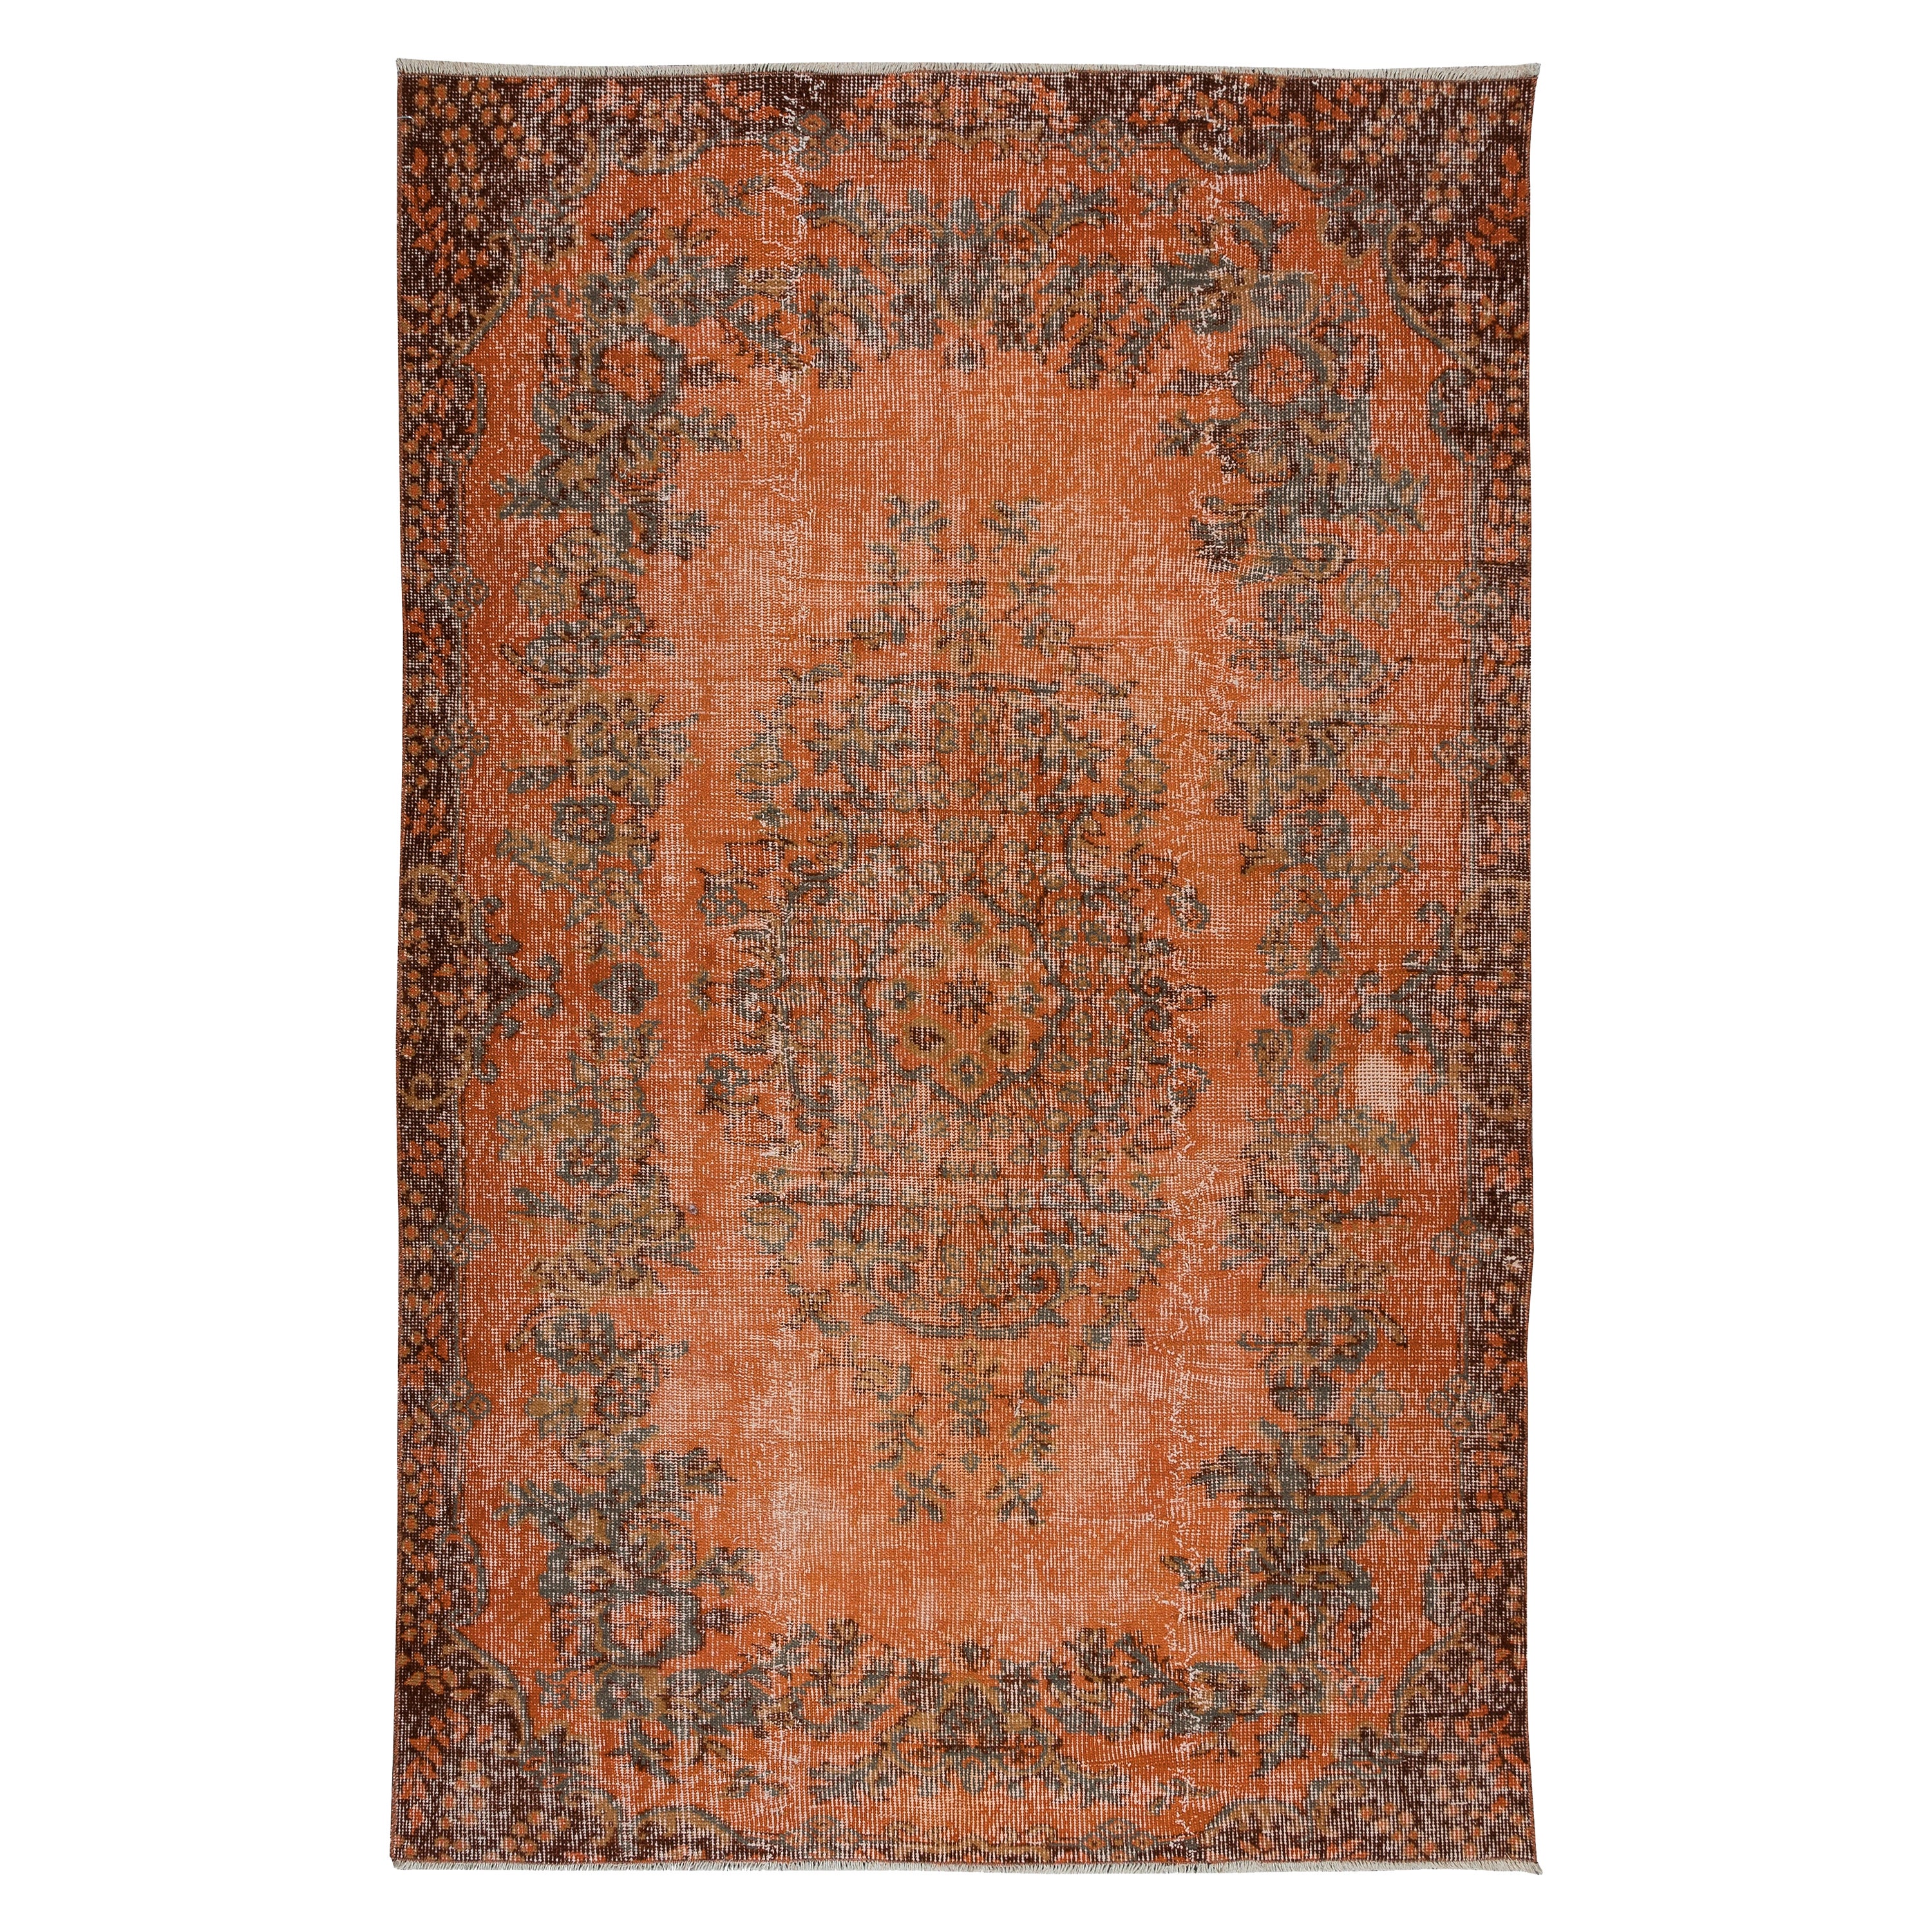 4.8x7.2 Ft Modern Burnt Orange Handmade Area Rug, Contemporary Turkish Carpet For Sale